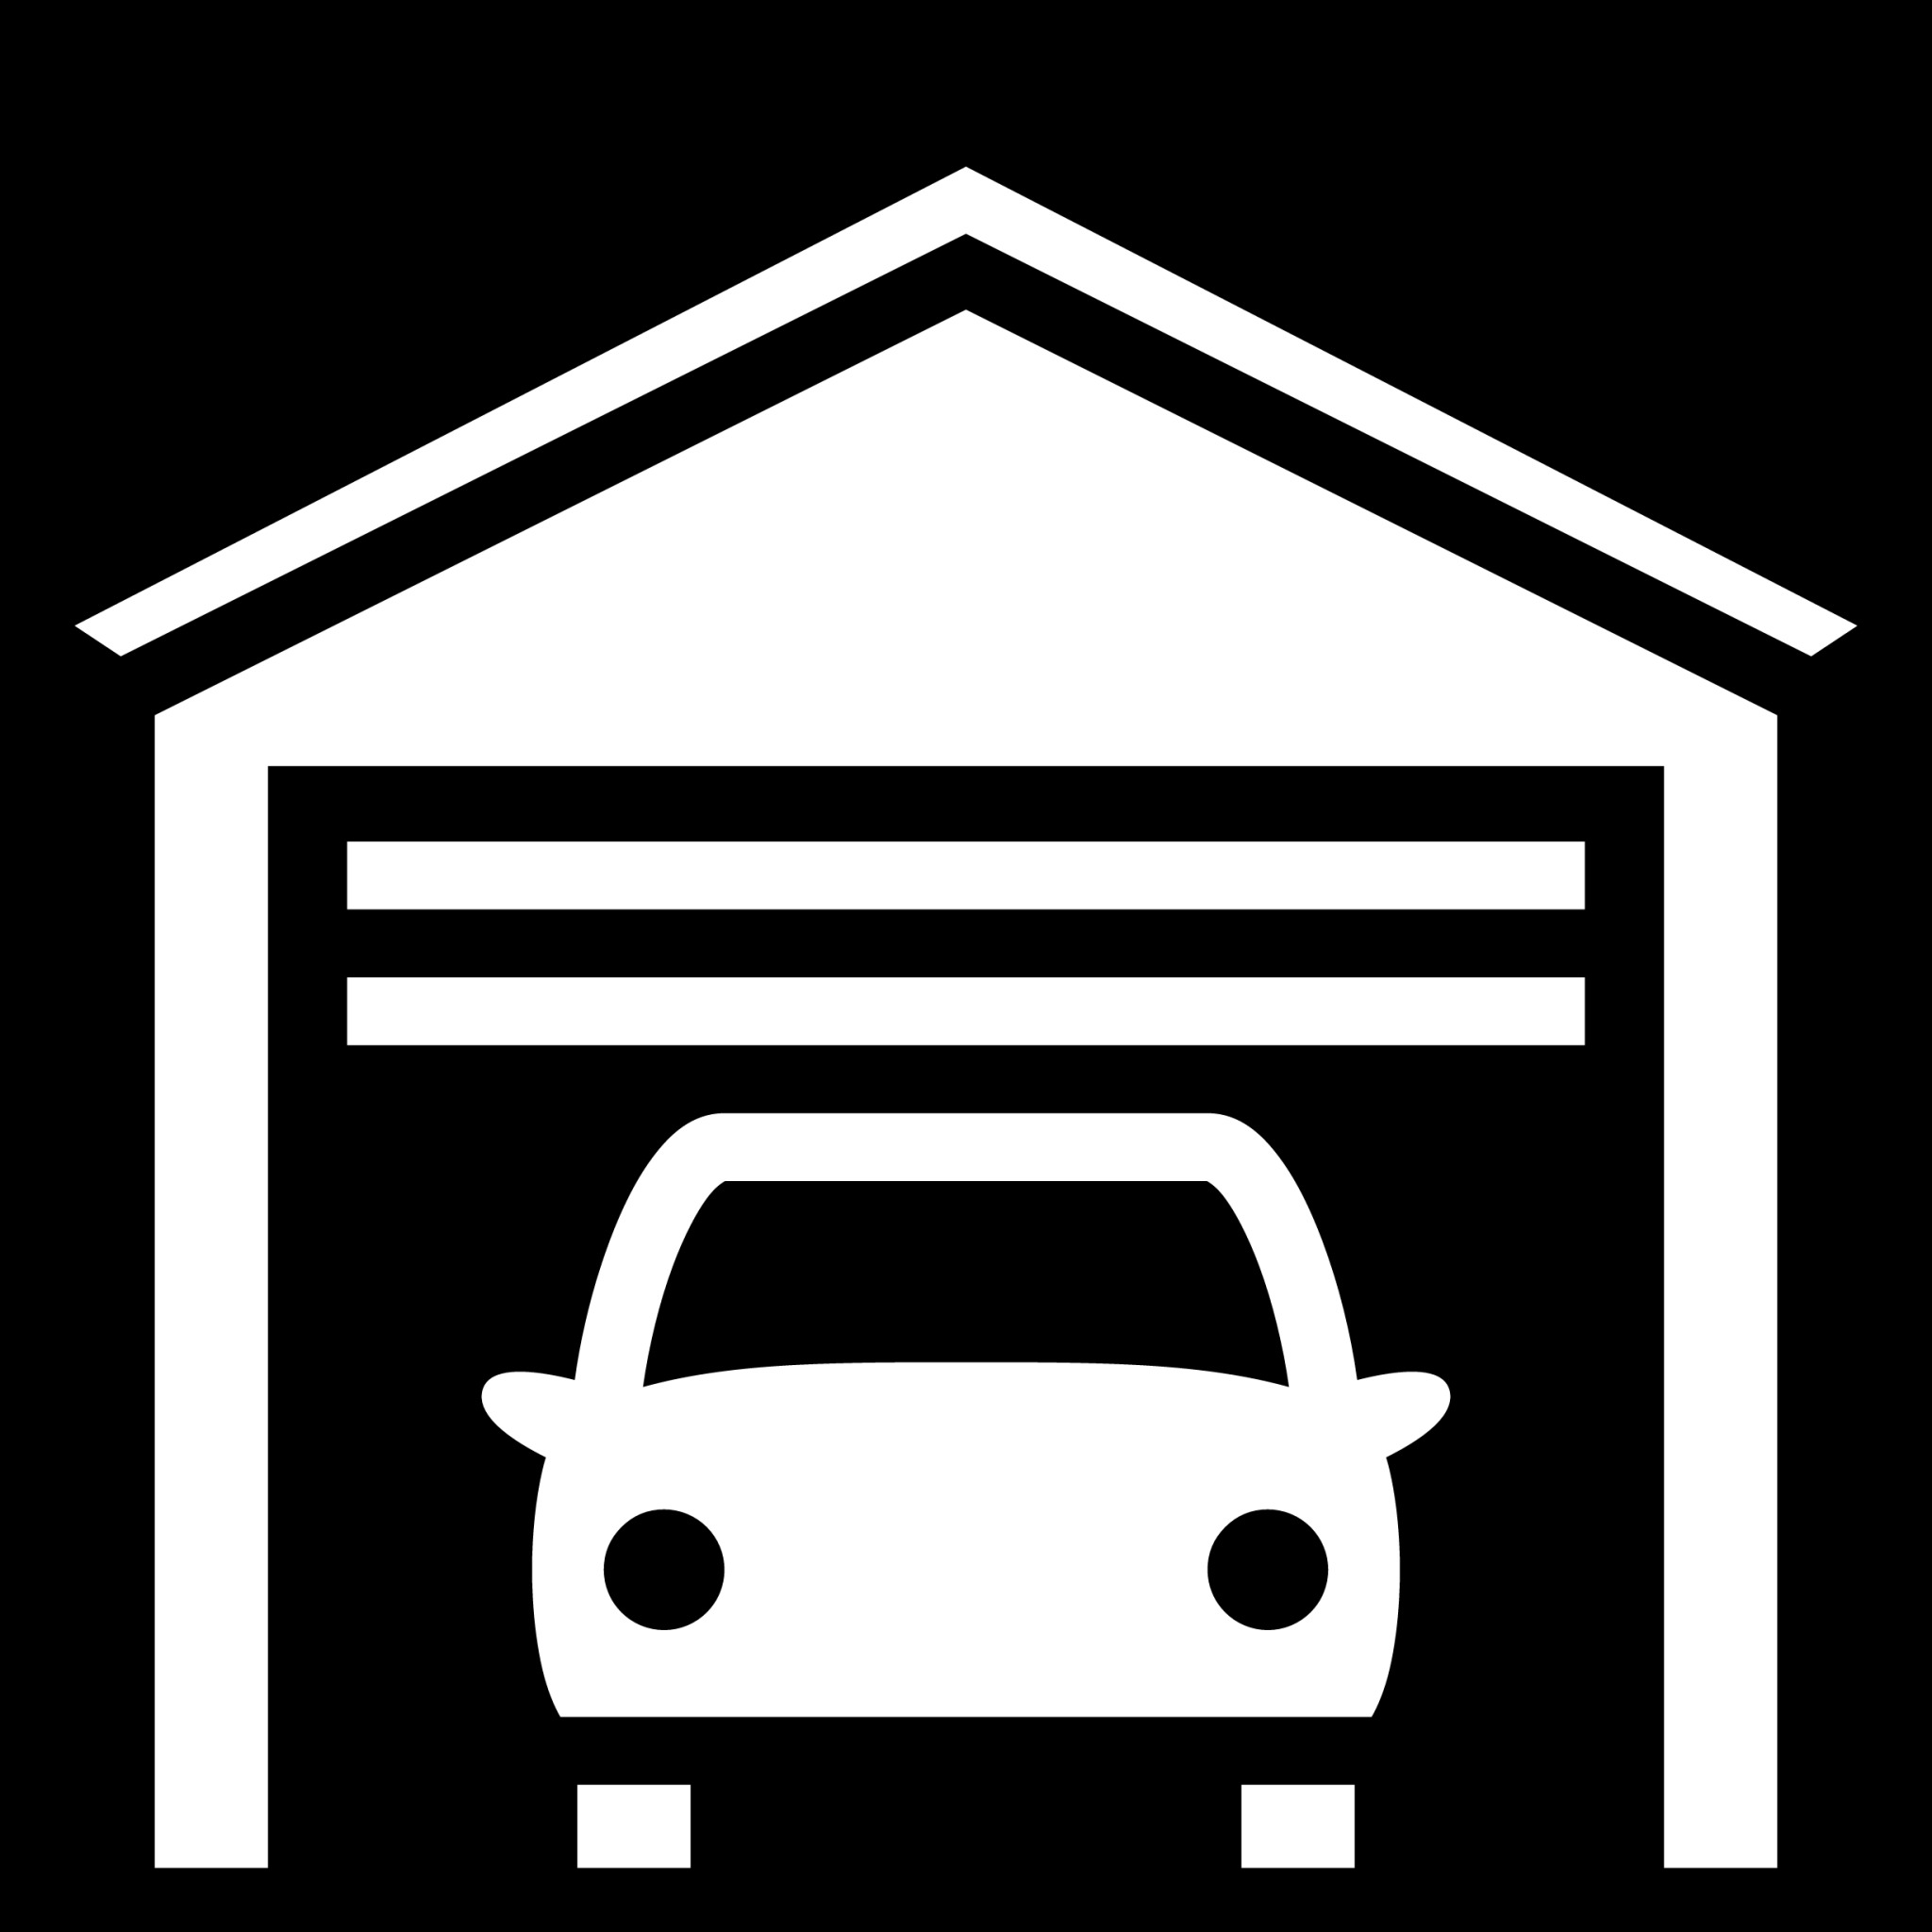 home garage icon